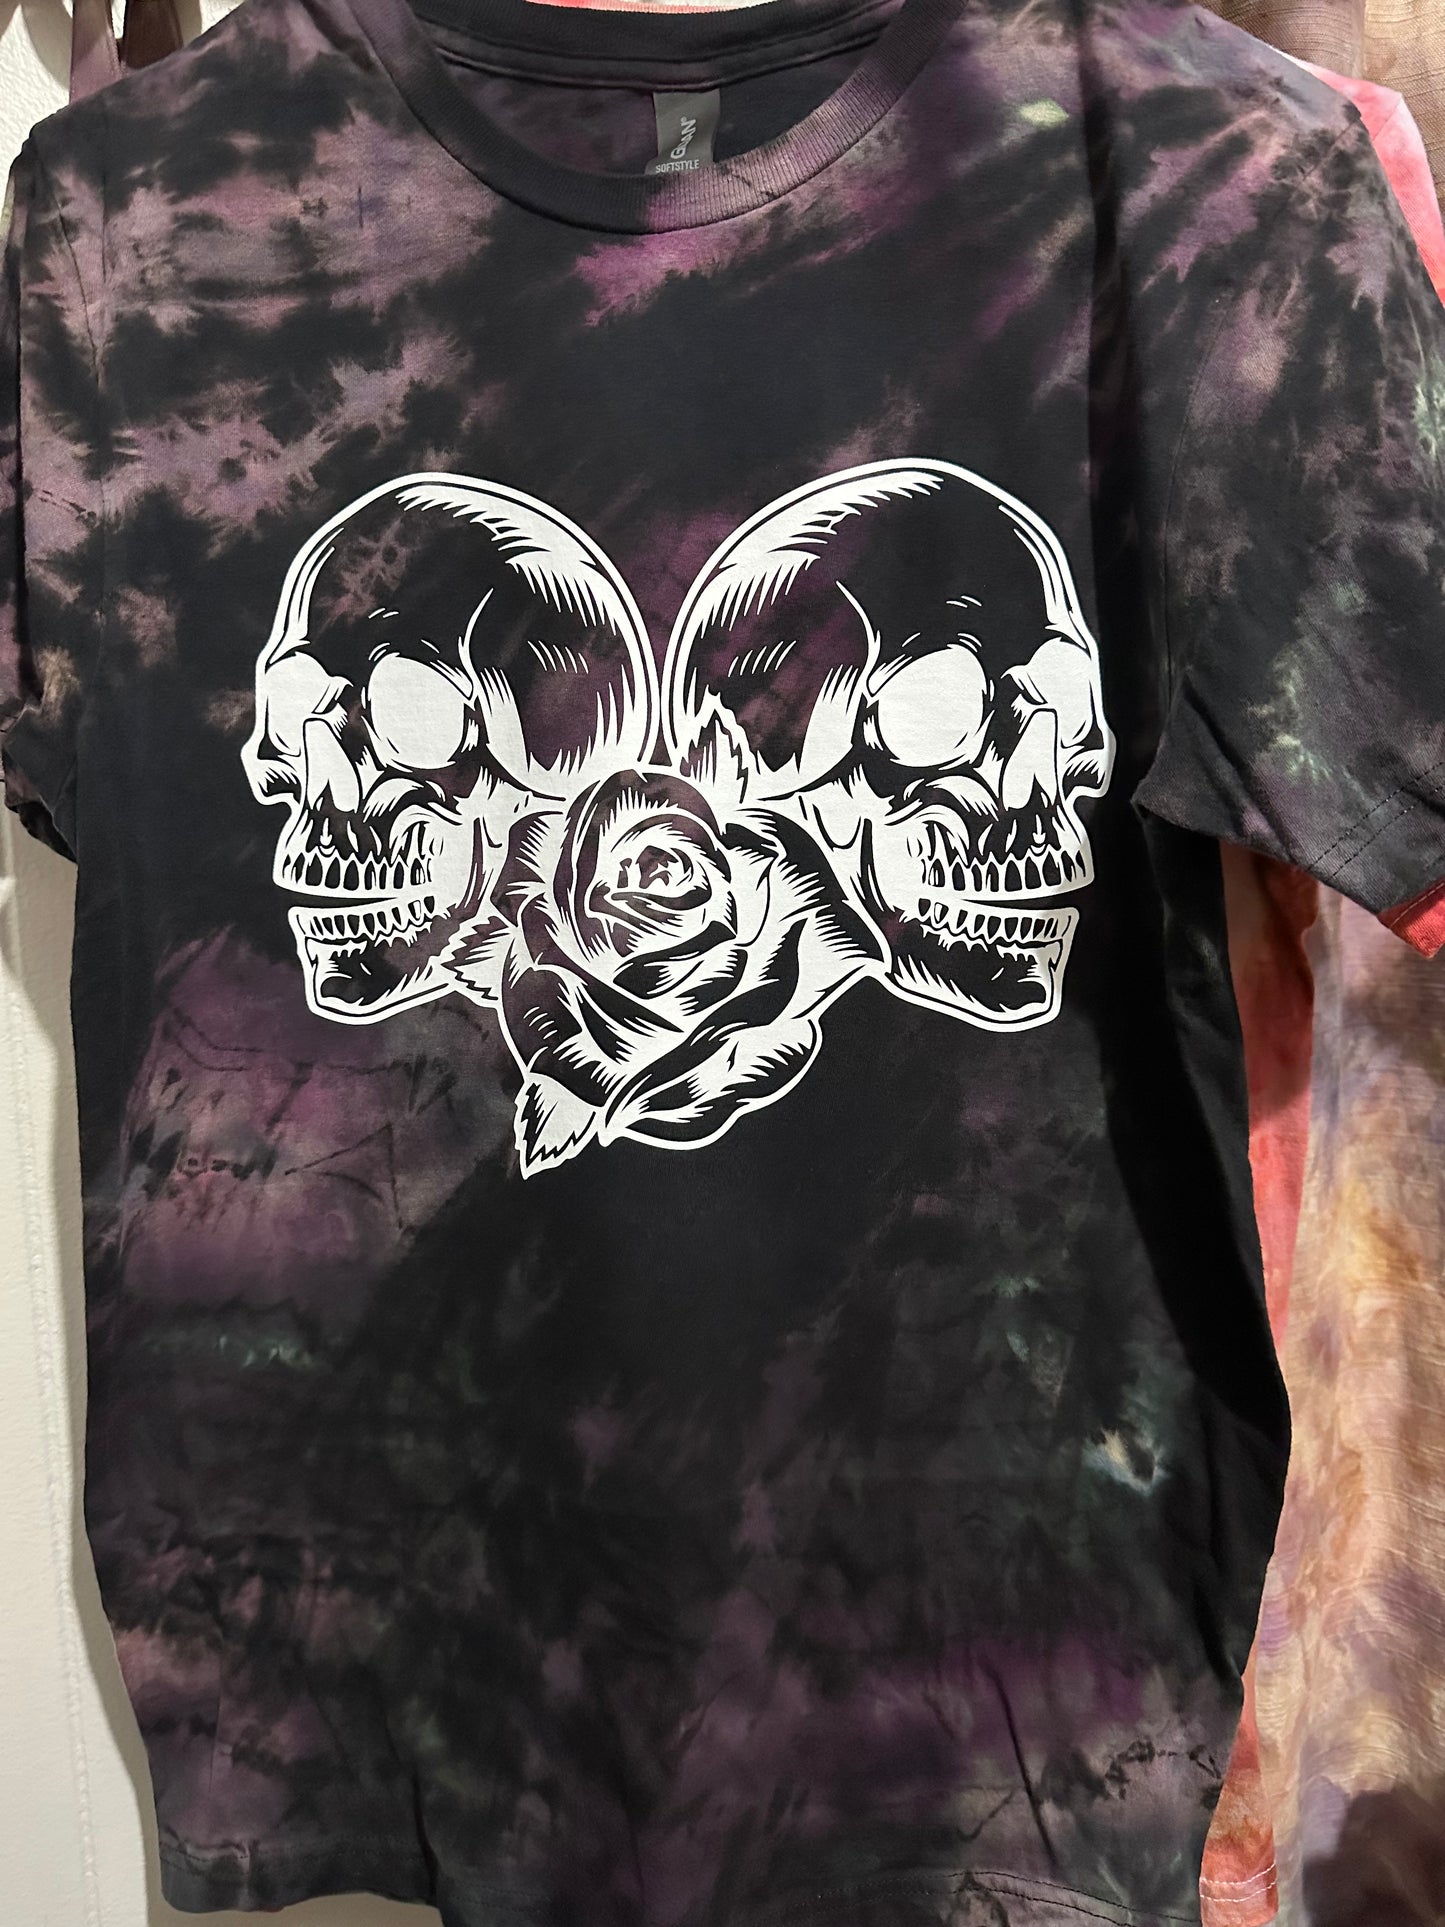 Rose and skulls